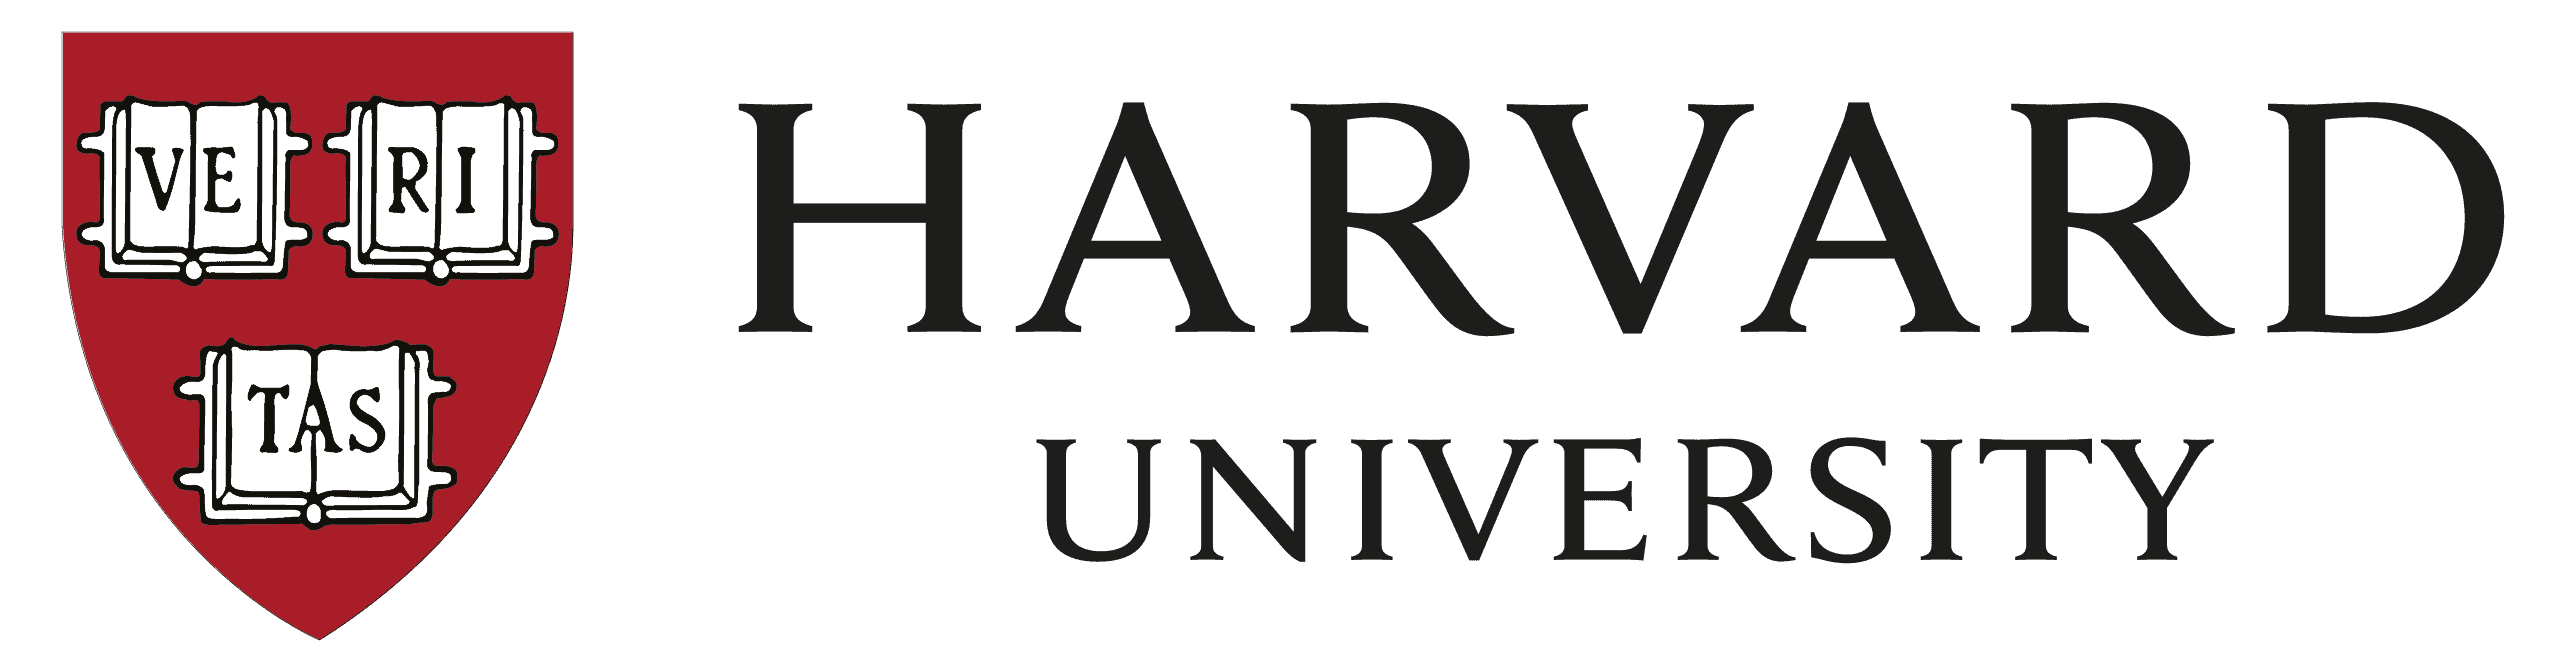 2560px-Harvard_University_logo.svg.png